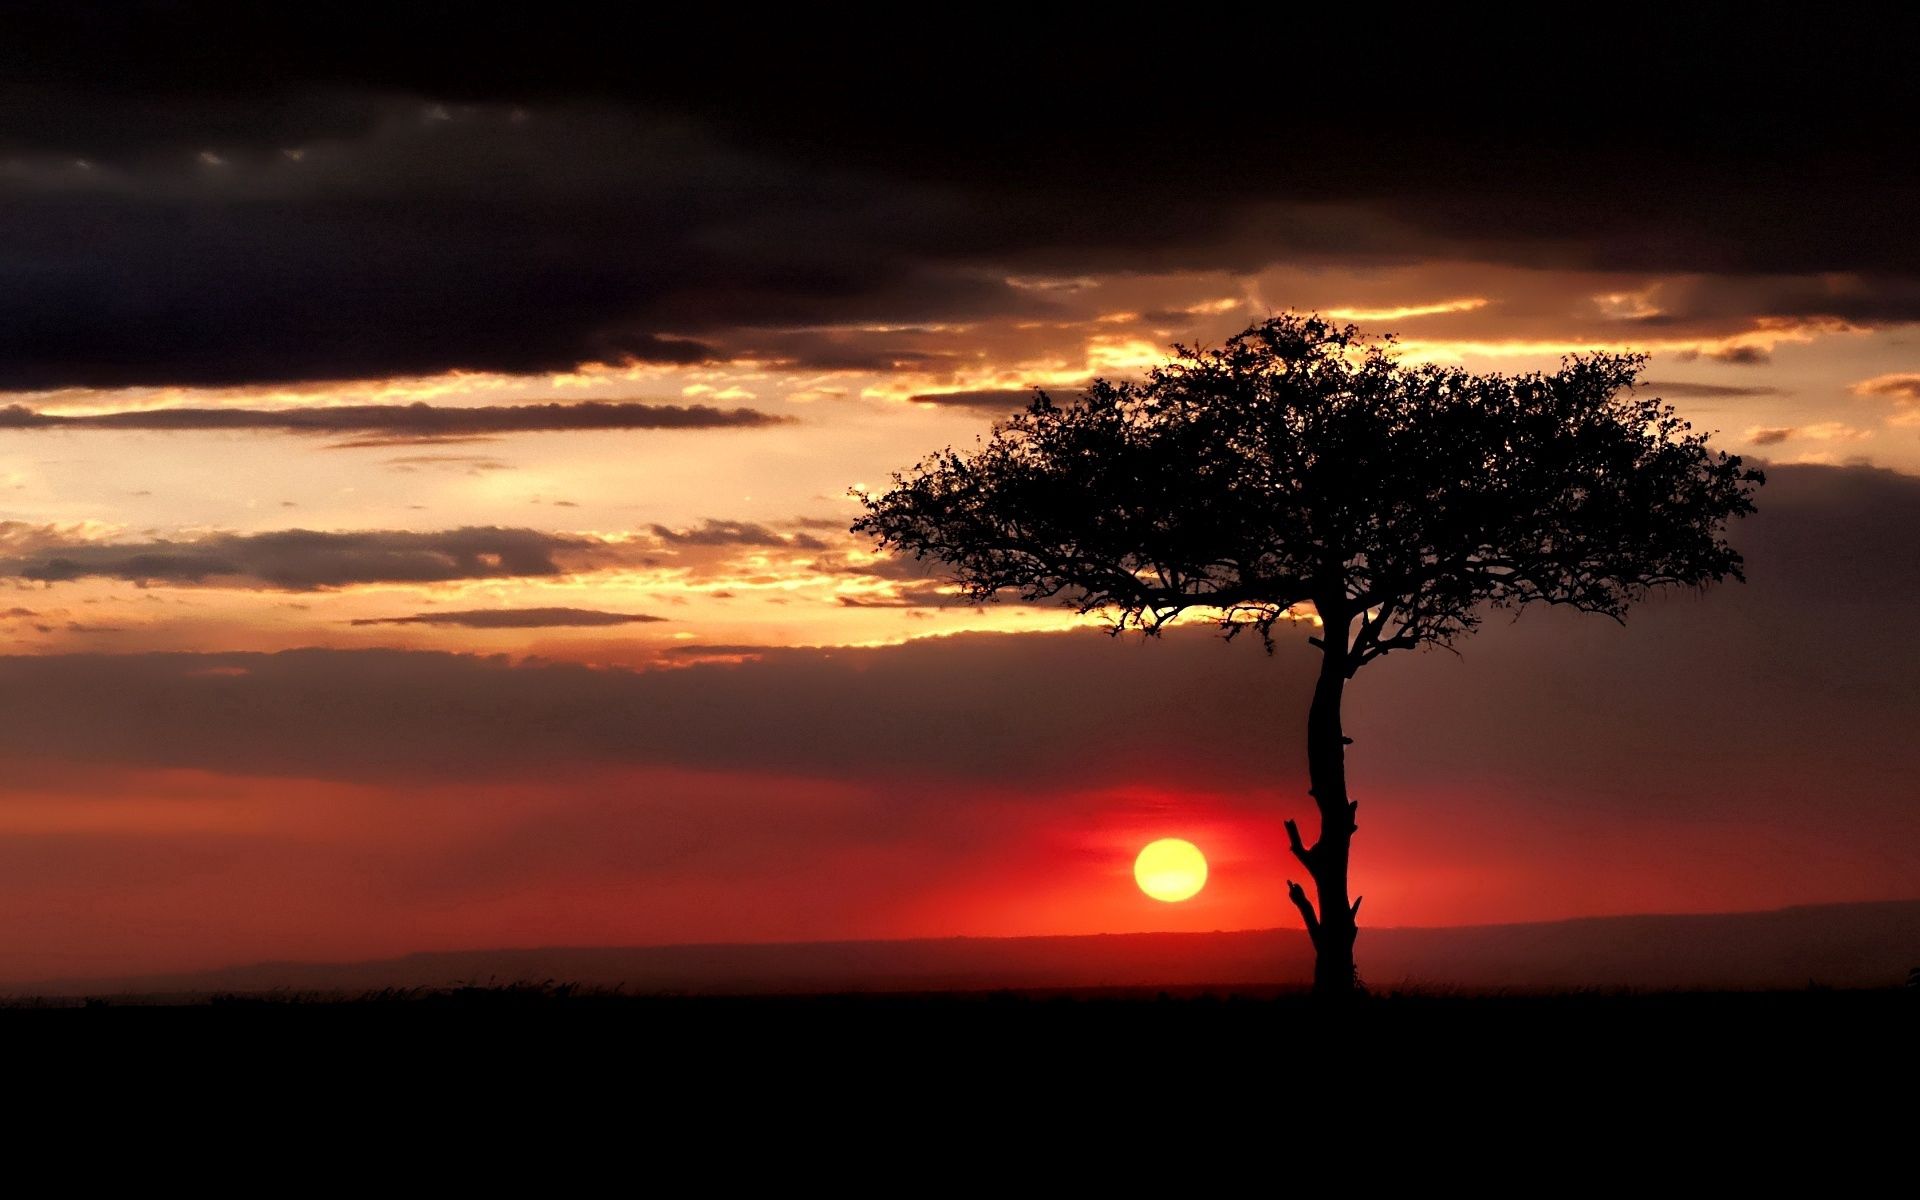 sun, savanna, nature, sunset, wood, tree, evening, lonely